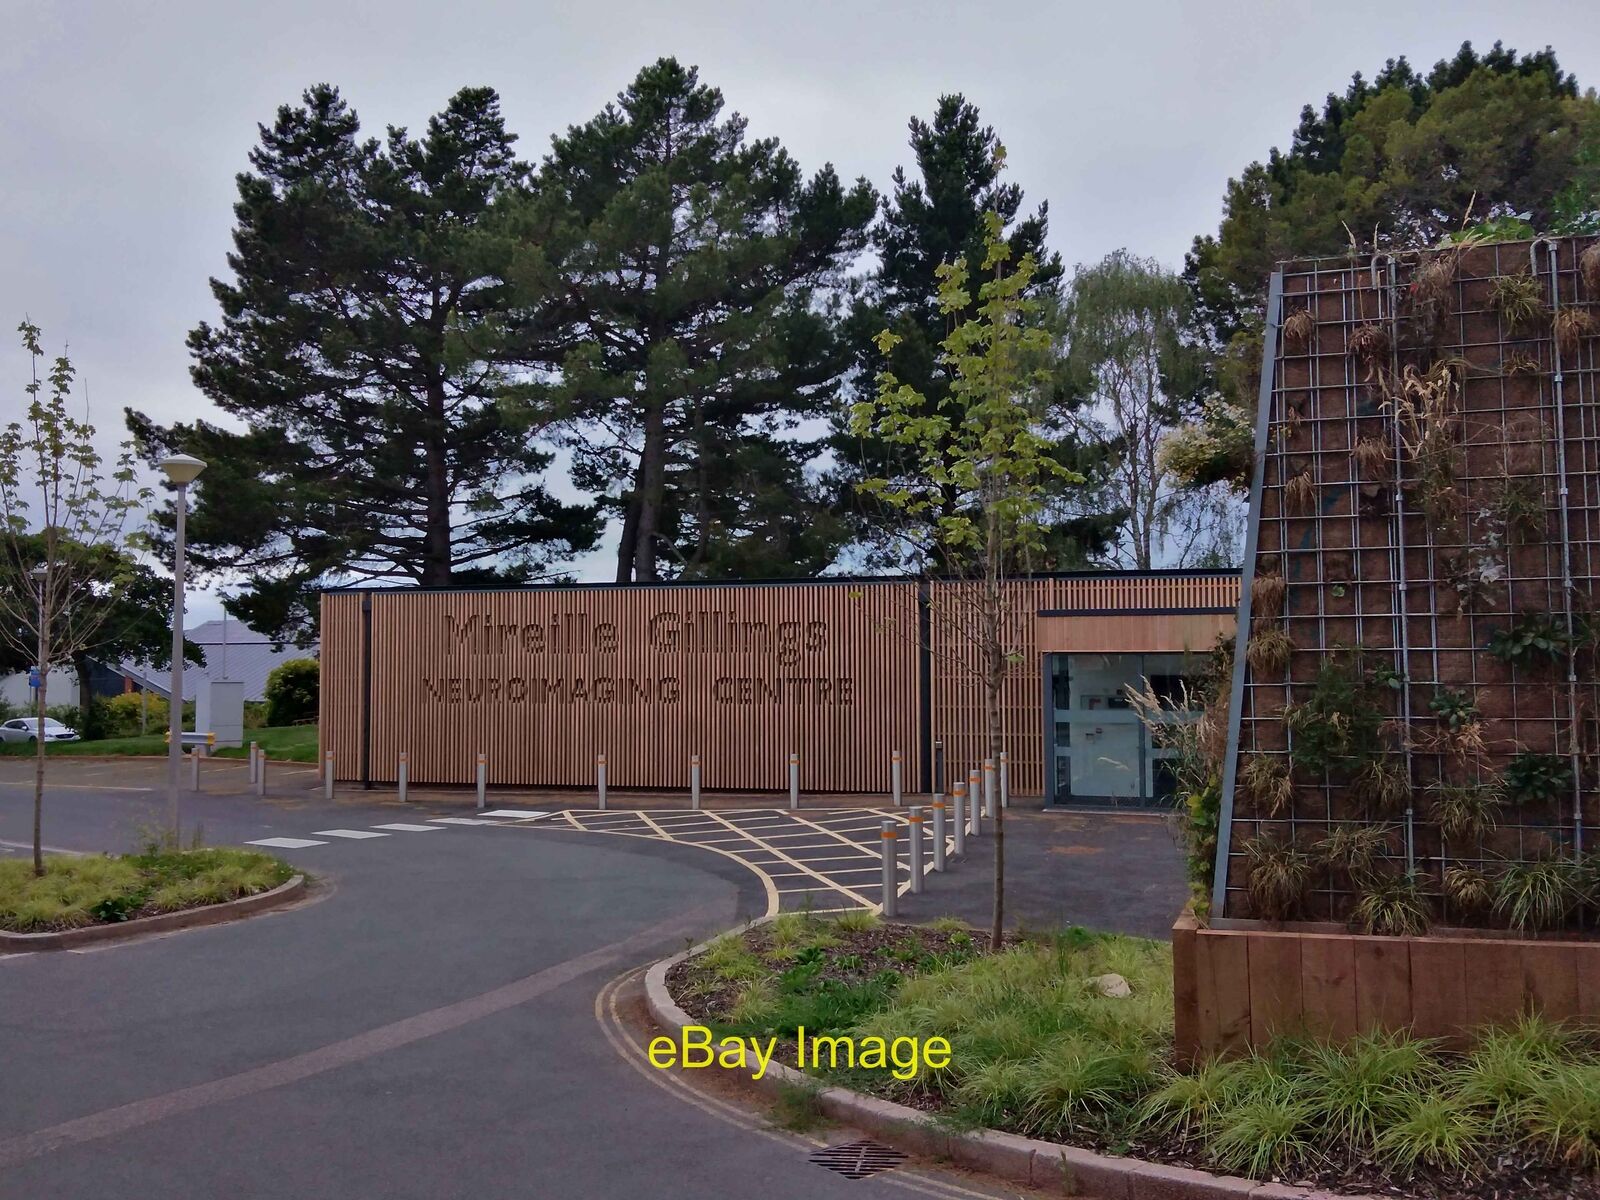 Photo 12x8 Neuroimaging centre, RD&E Hospital, Exeter  c2020